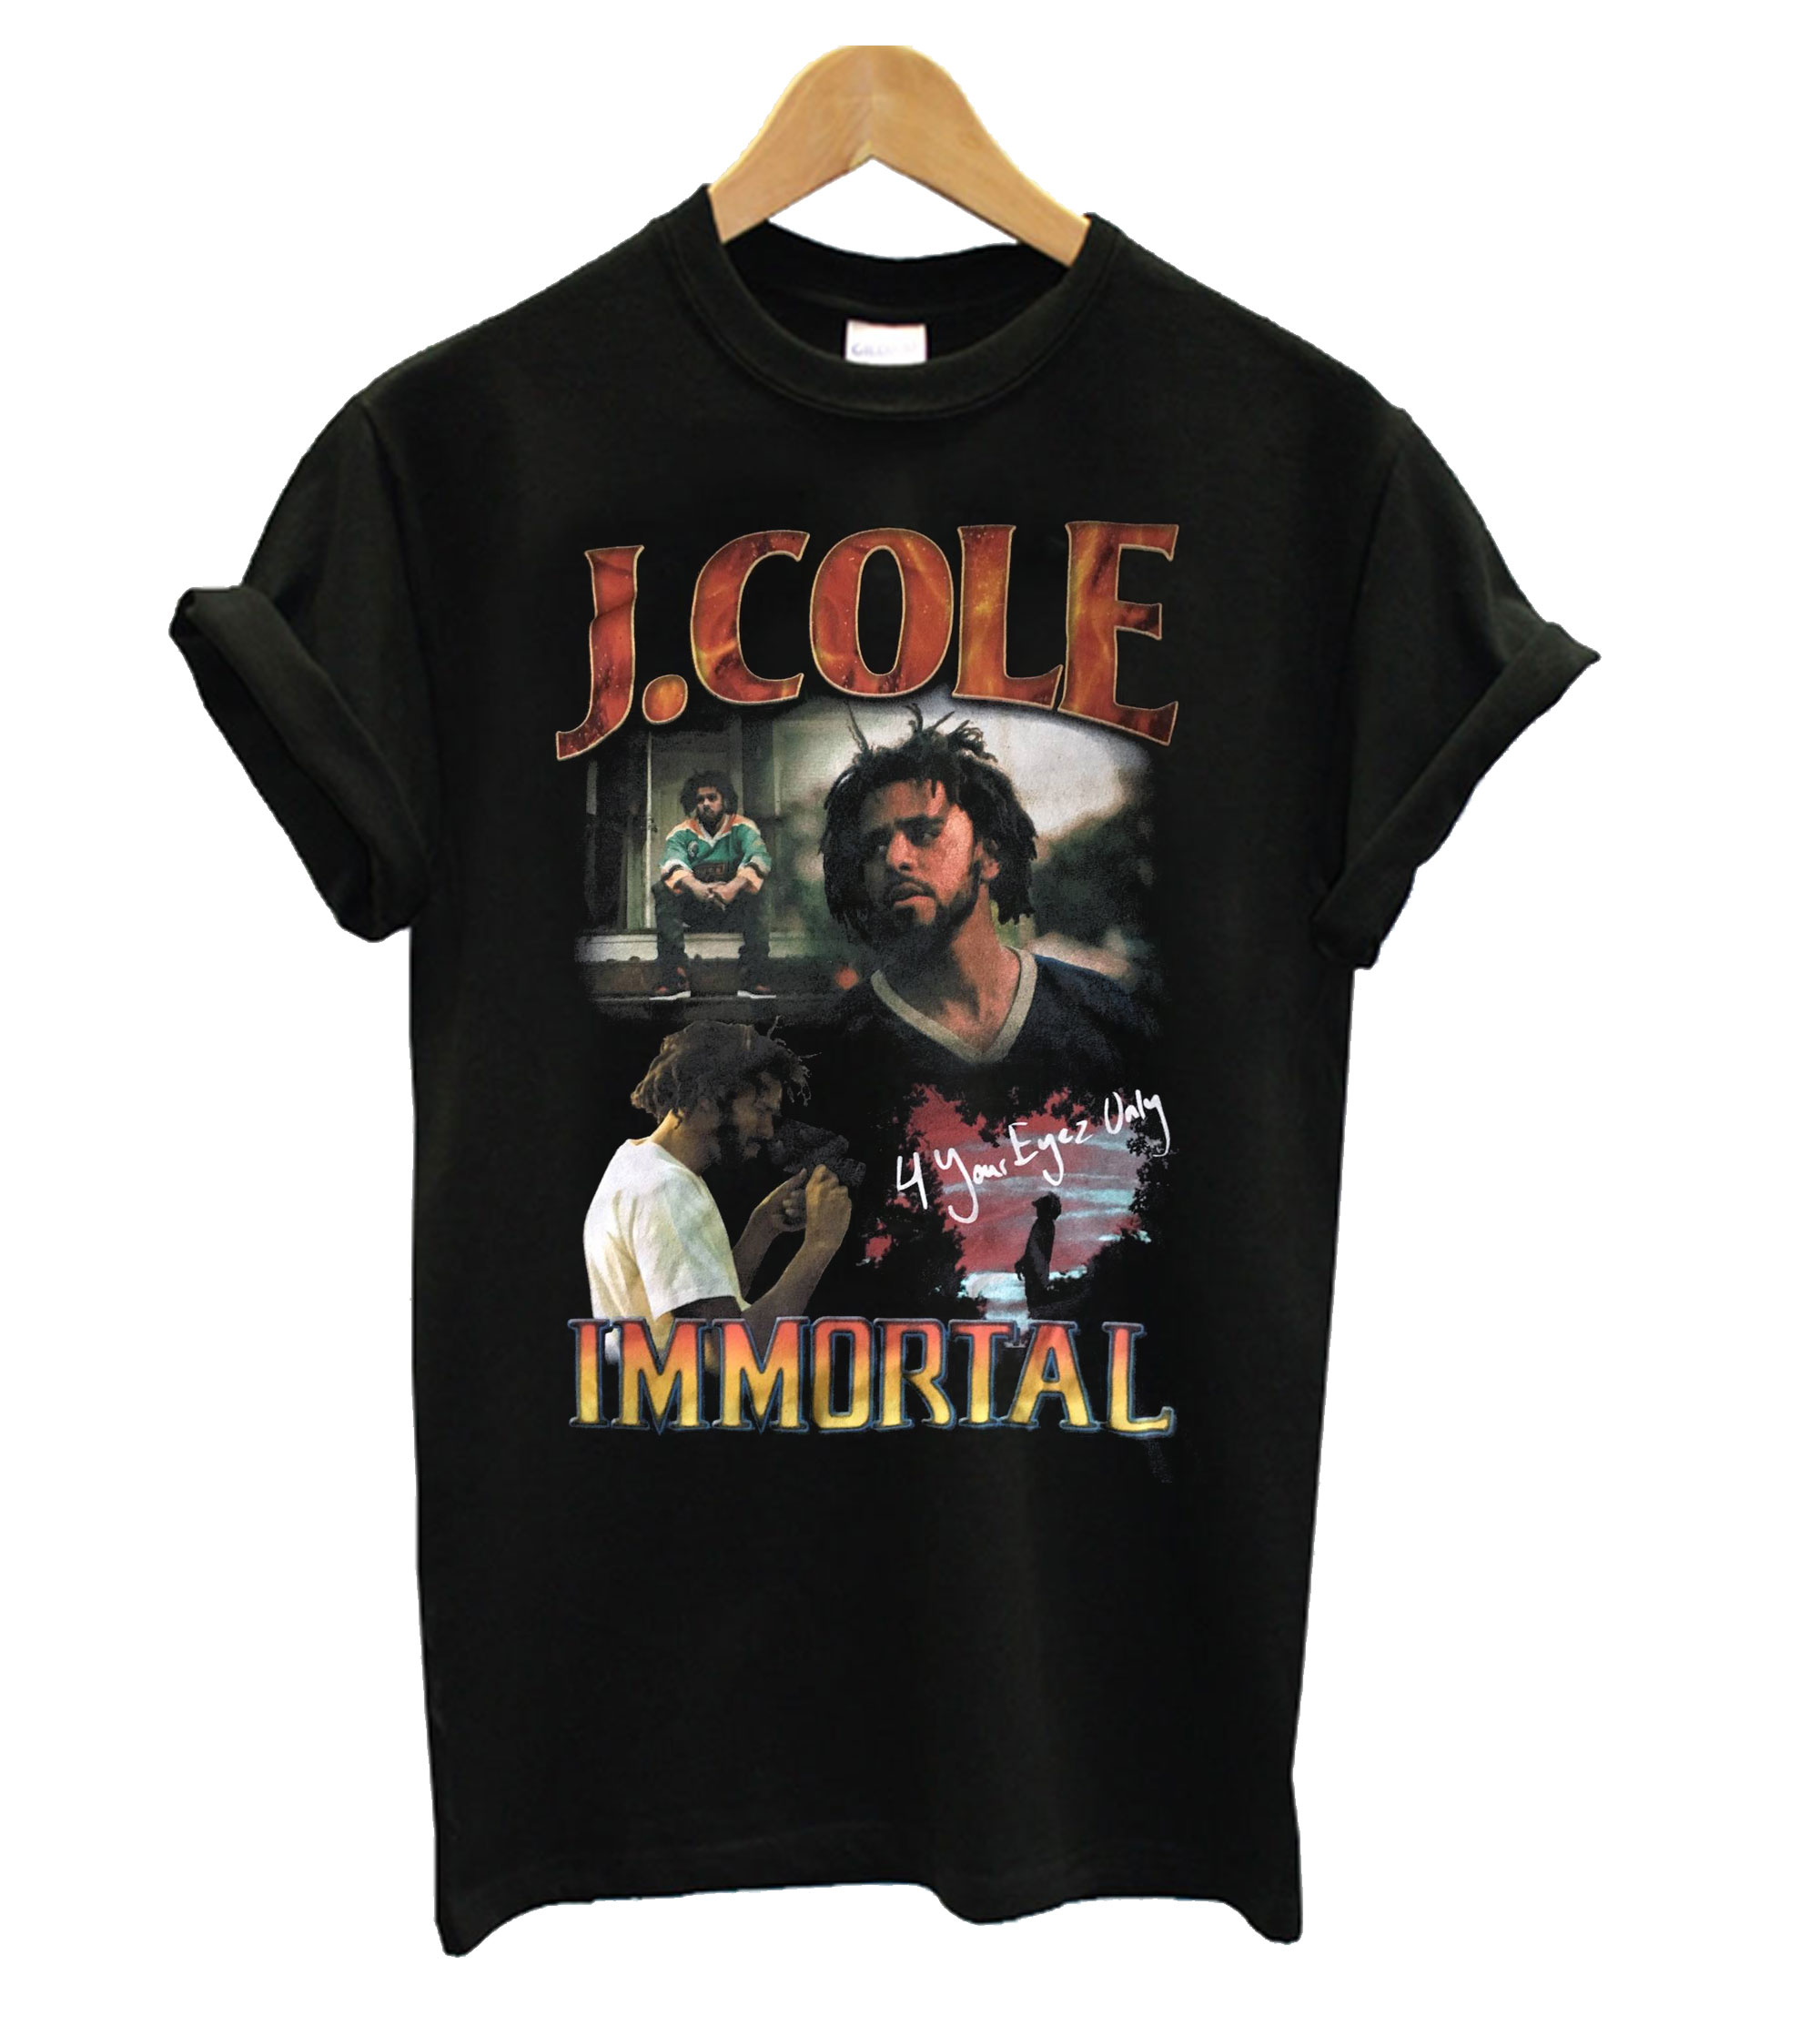 J cole immortal t shirt - chineselalaf